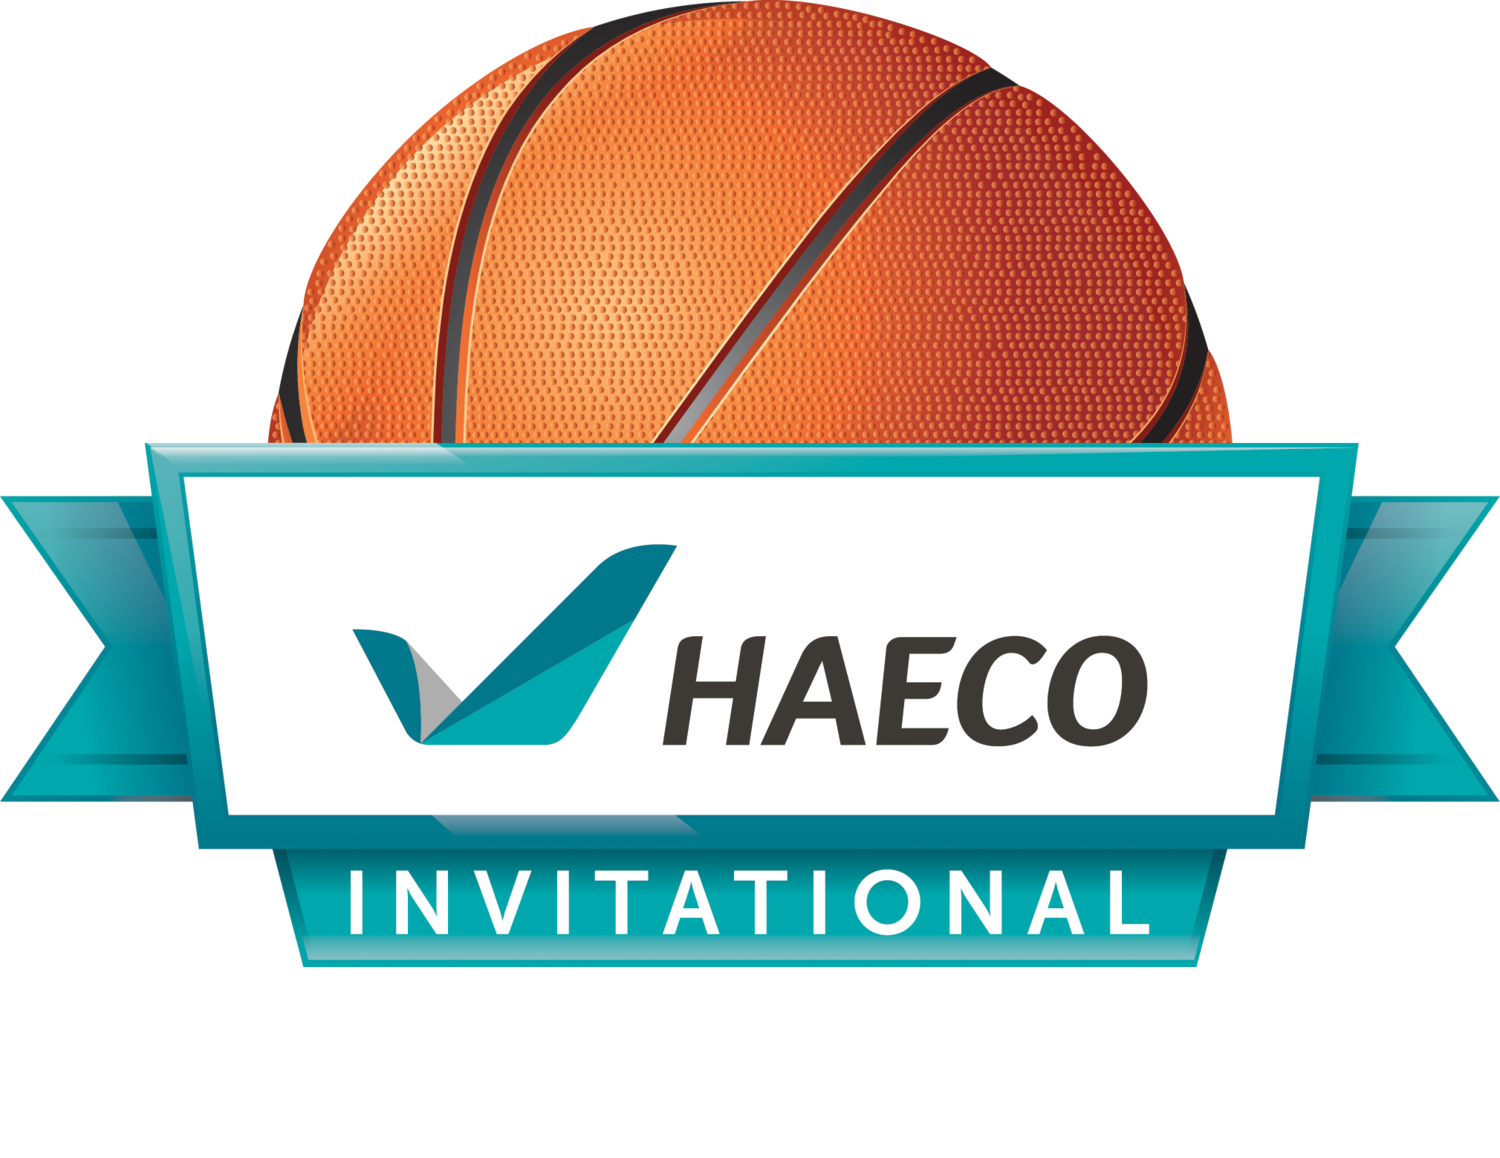 HAECO INVITATIONAL